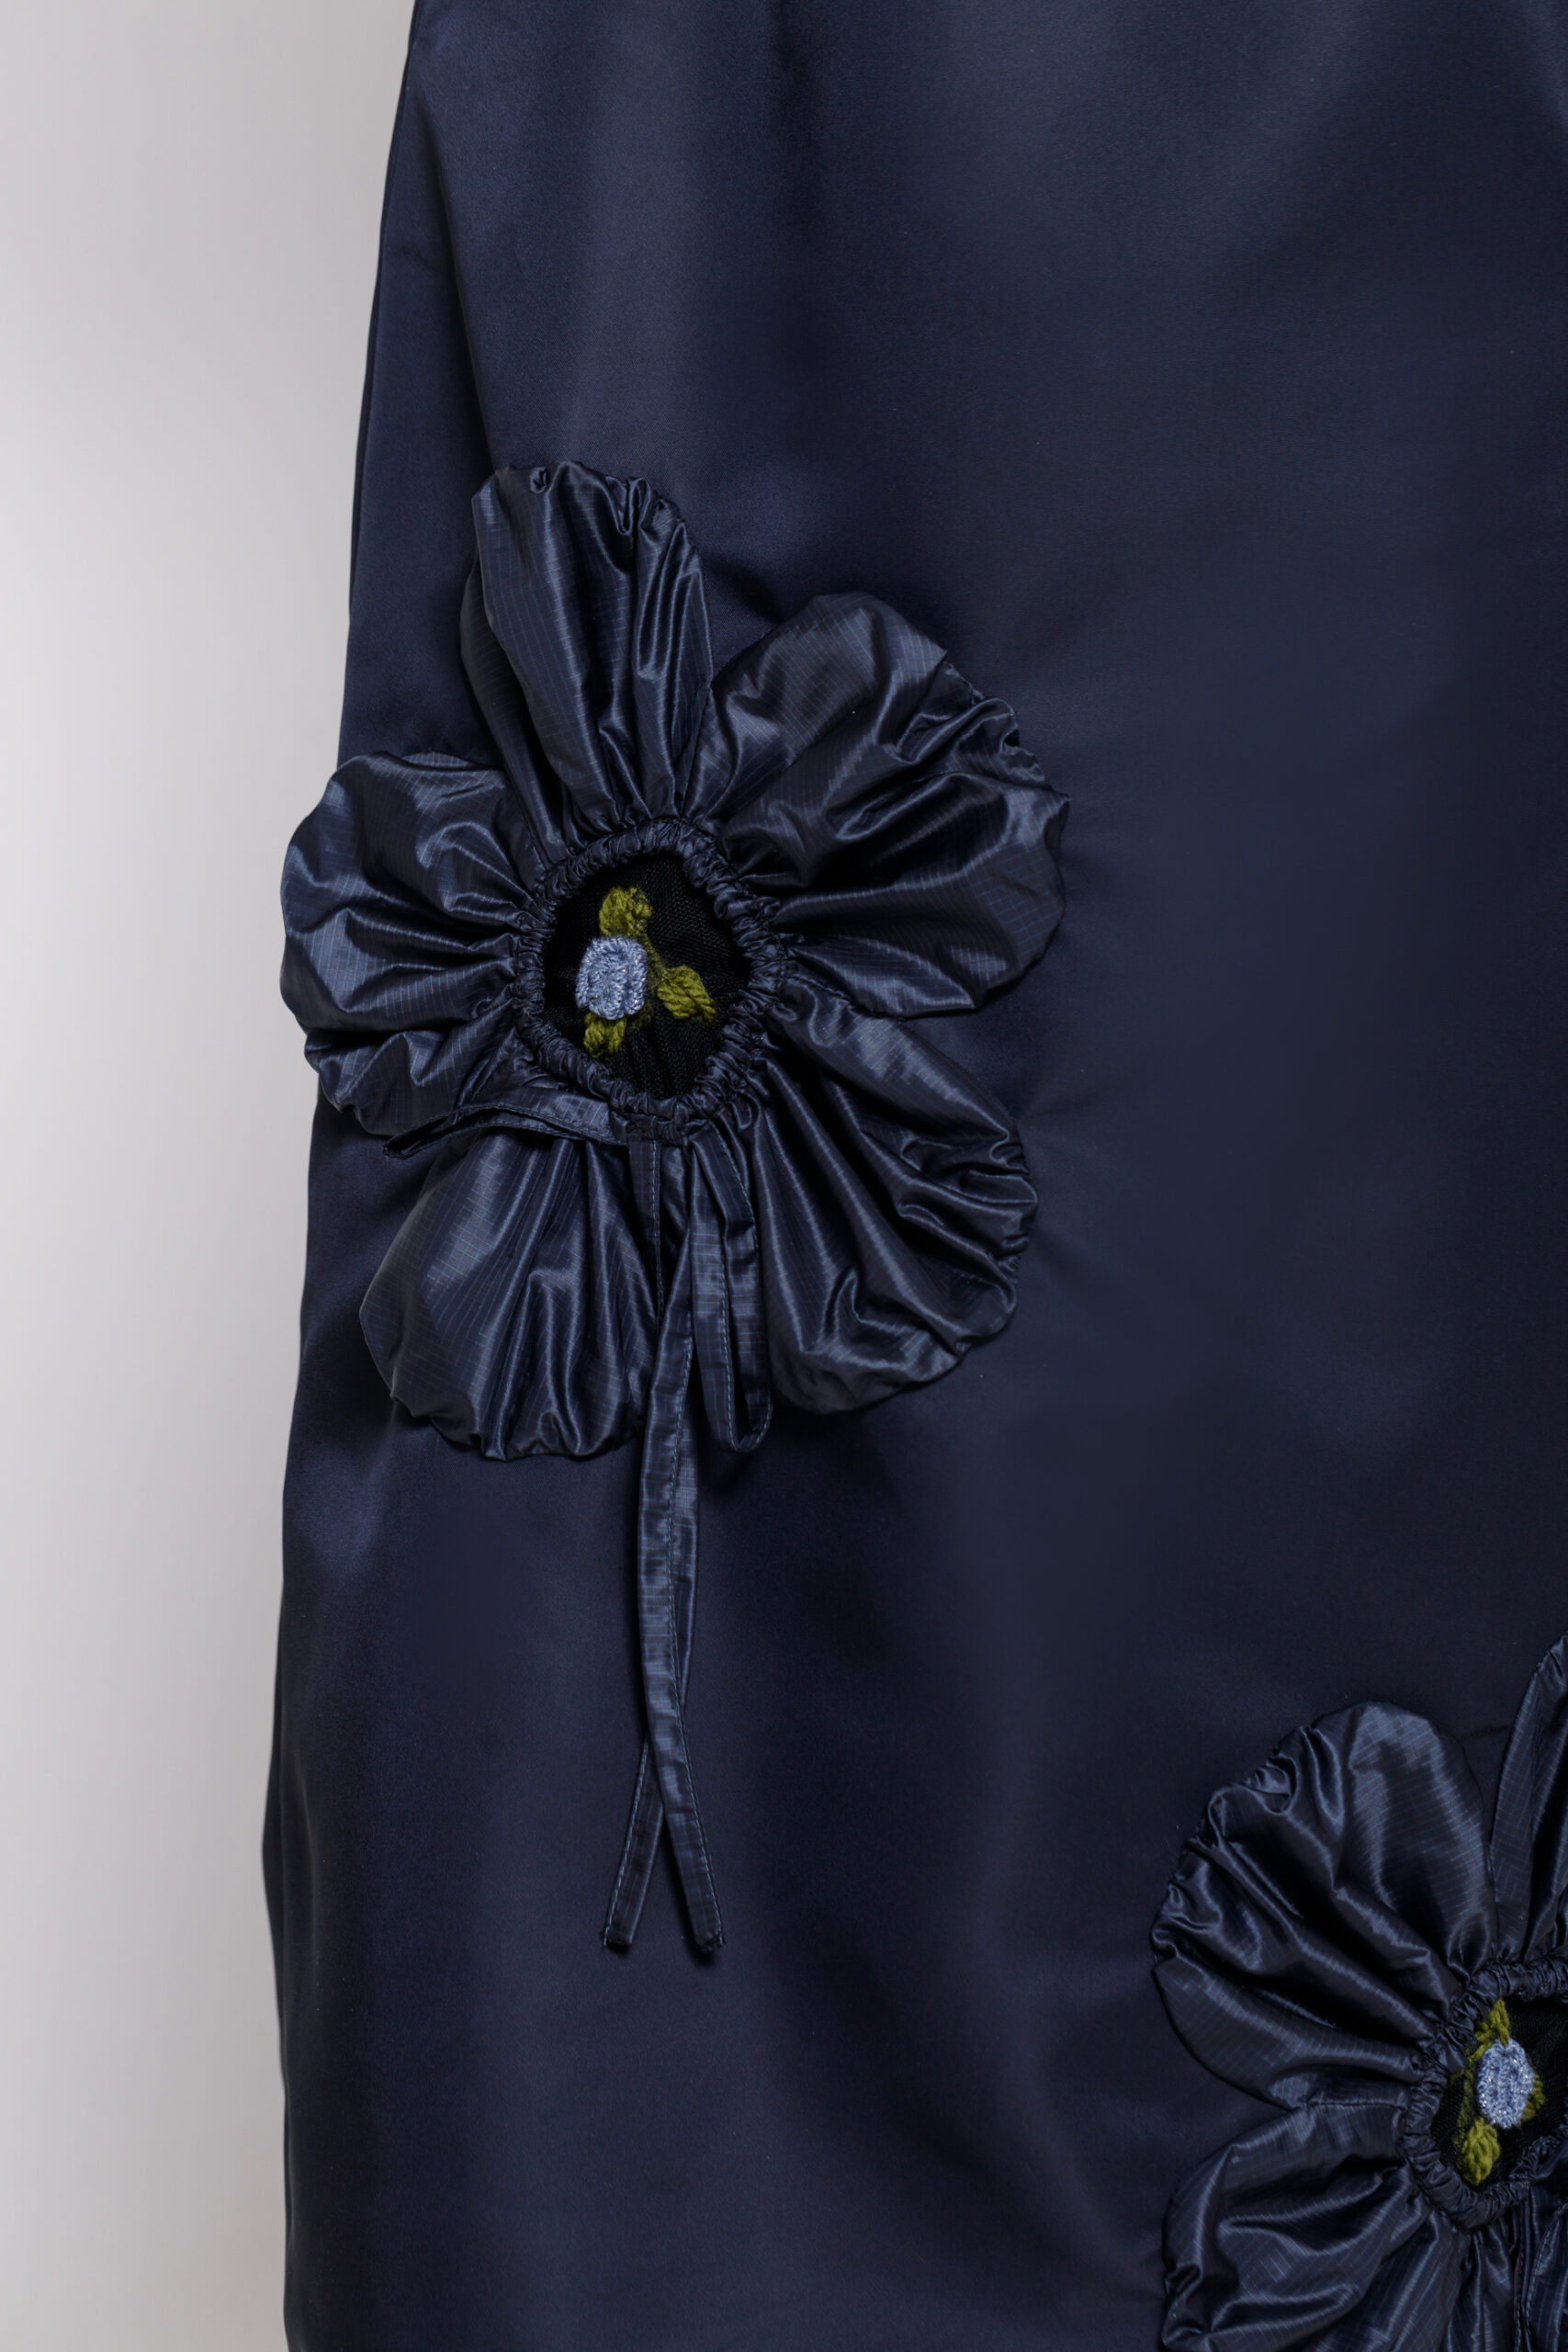 FLORY Navy blue skirt with volumetric flowers. Natural fabrics, original design, handmade embroidery